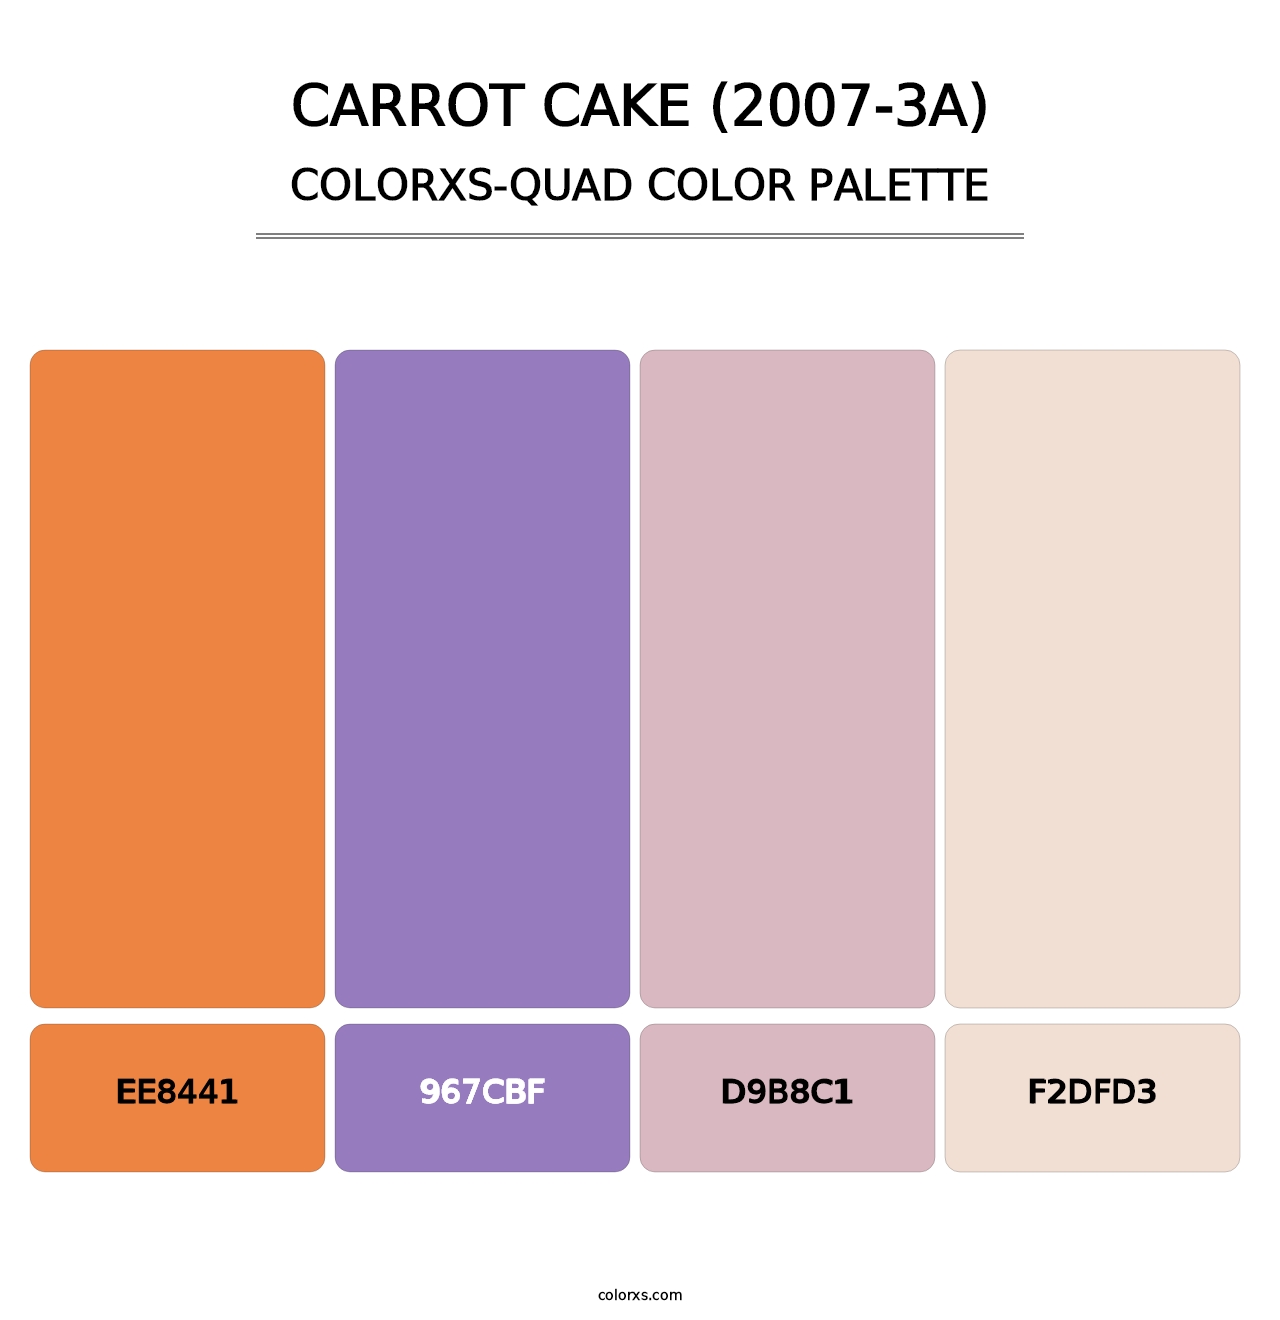 Carrot Cake (2007-3A) - Colorxs Quad Palette